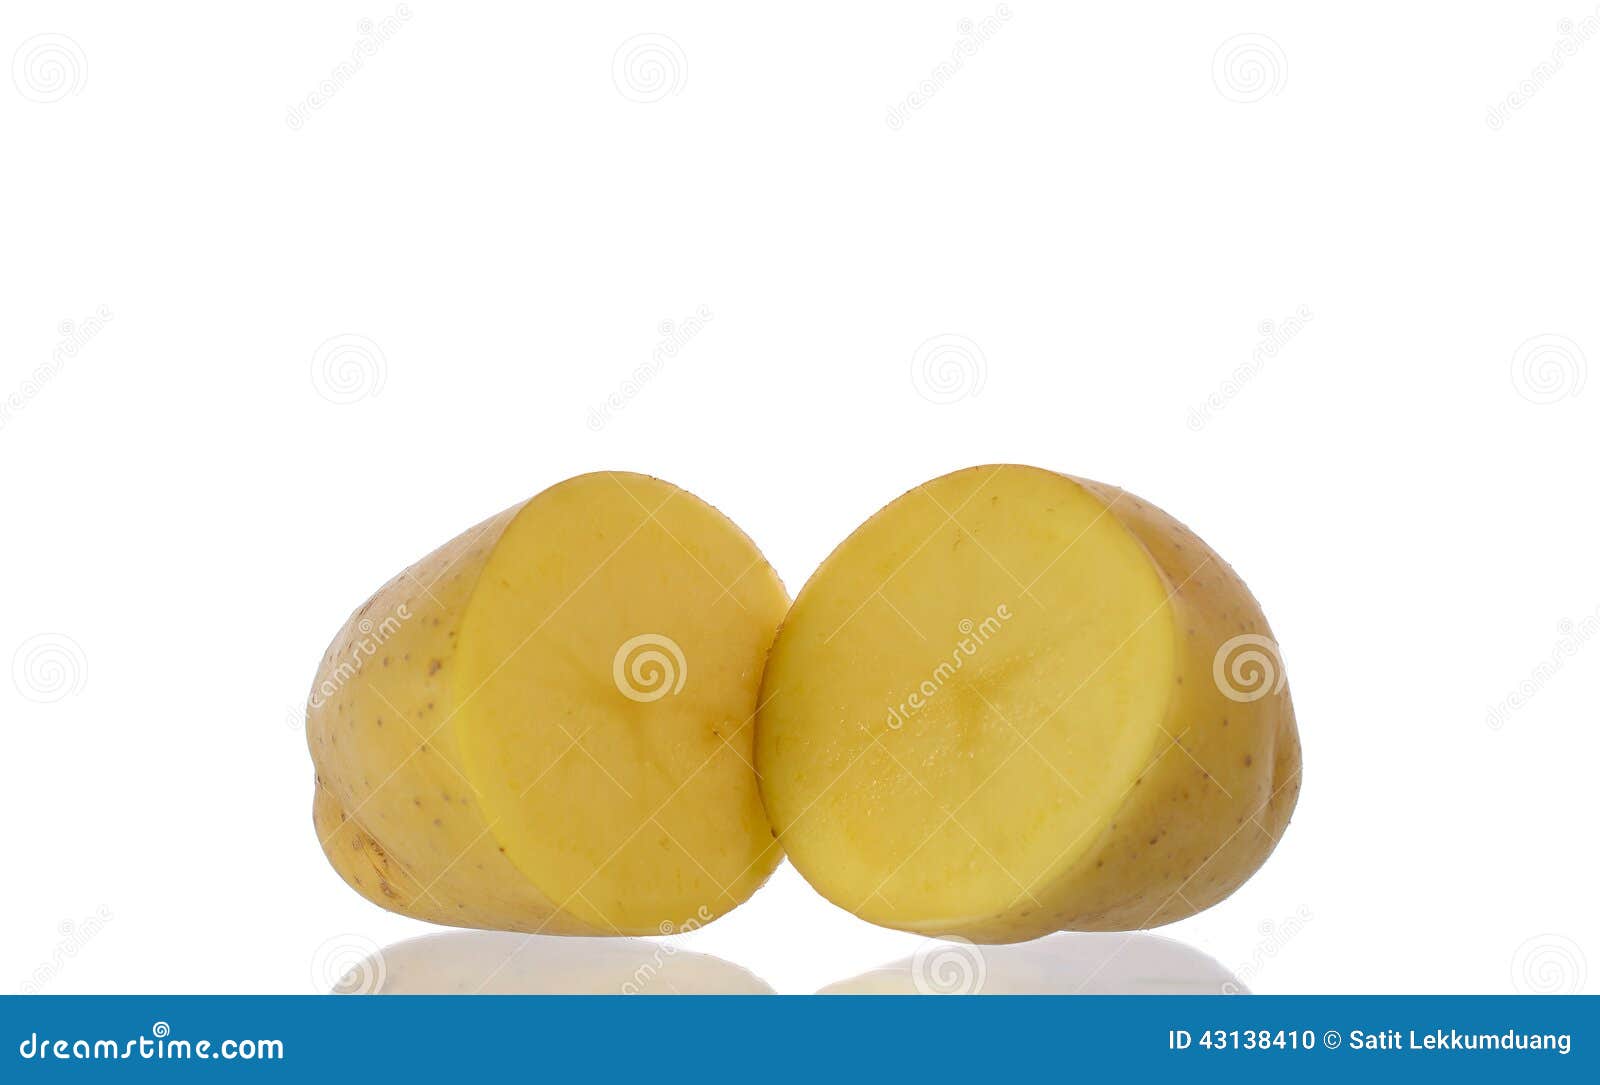 split-potato-new-isolated-white-background-close-up-43138410.jpg